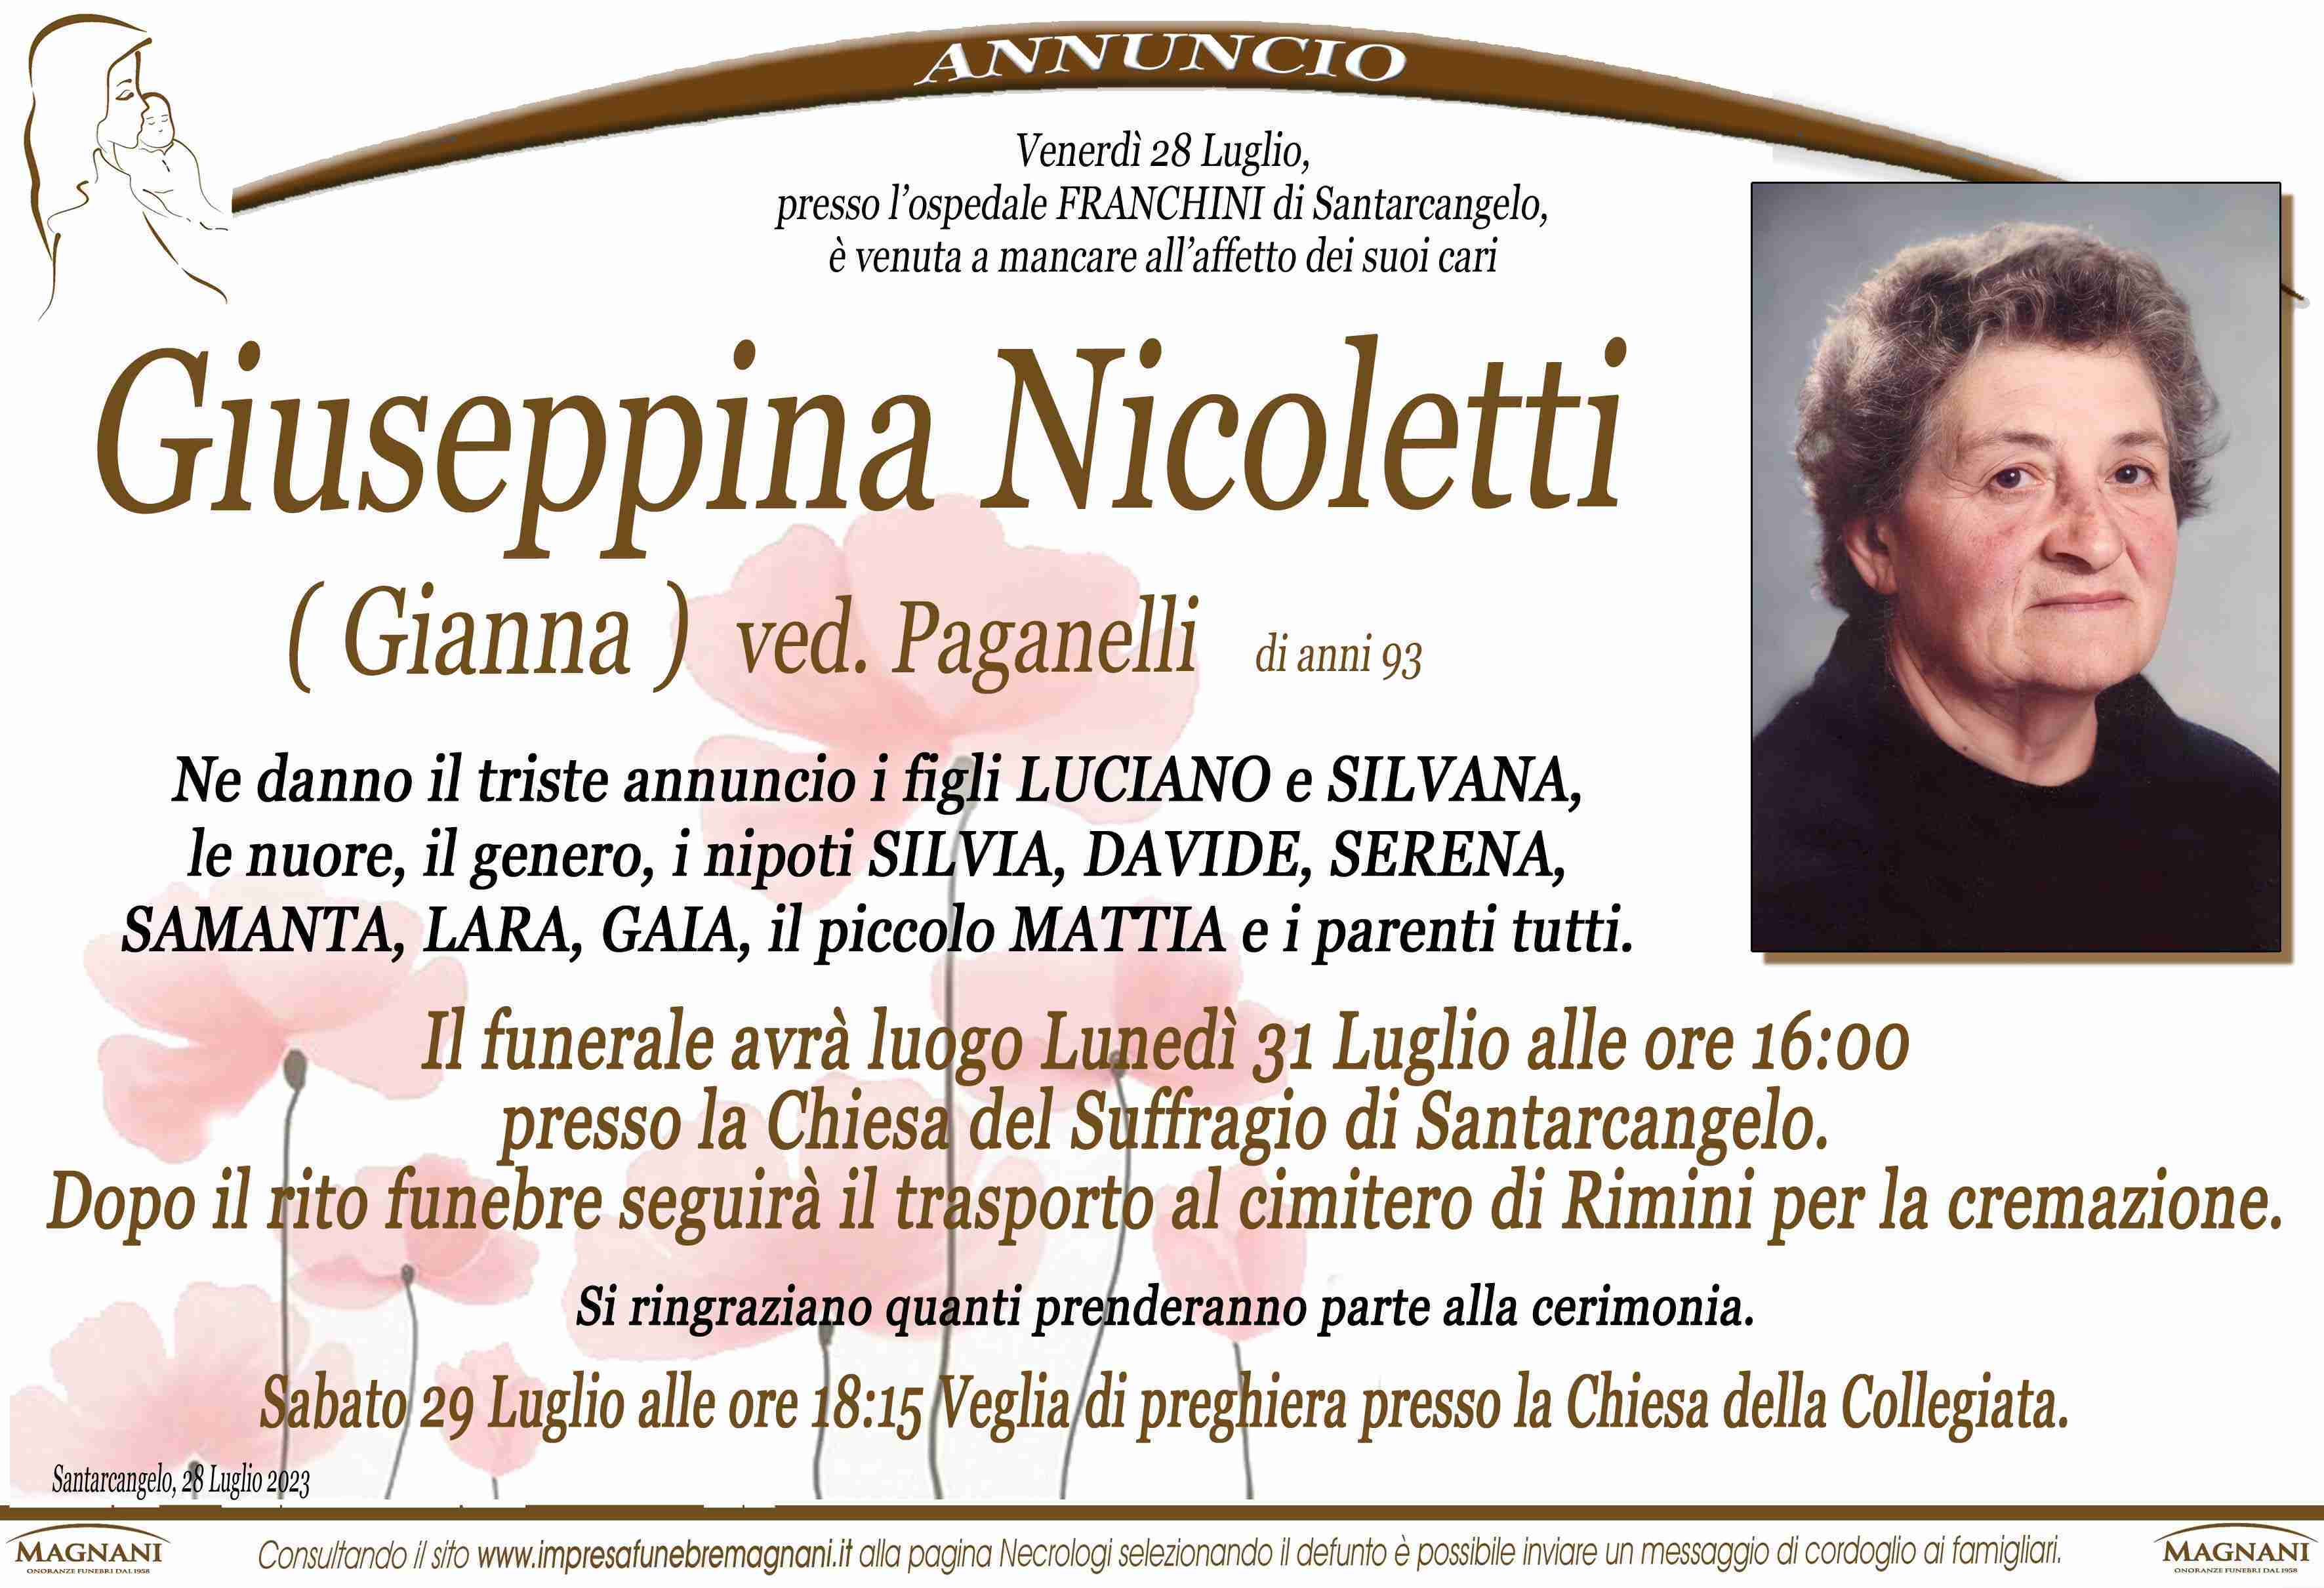 Giuseppina Nicoletti